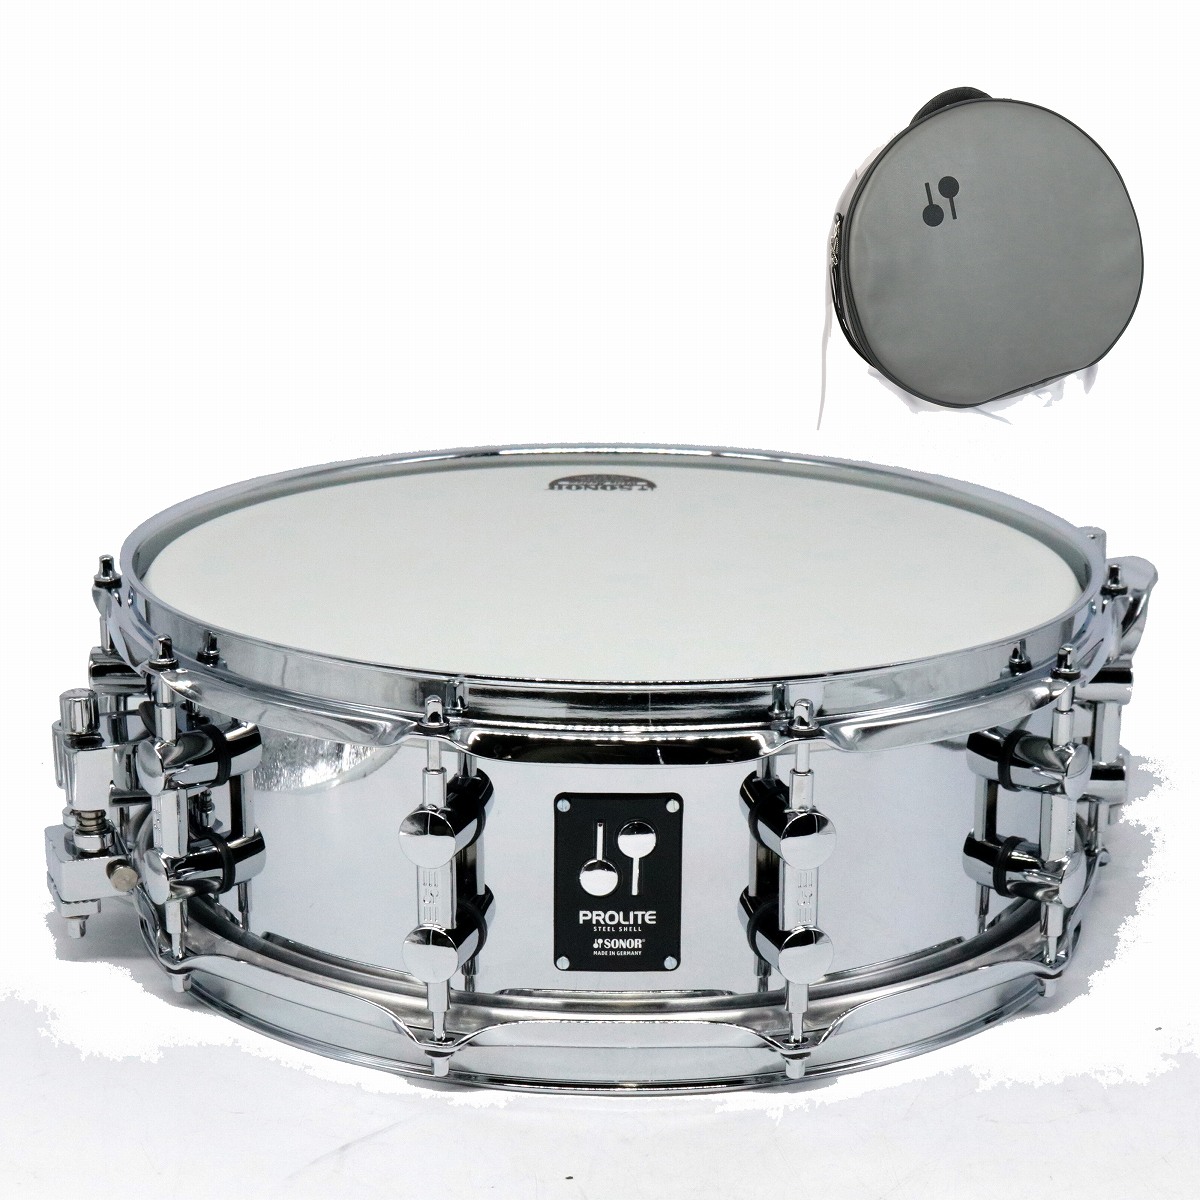 MEINL Percussion マイネル ジャムカホン 固定式スネア内蔵 JC50BW 国内正規品